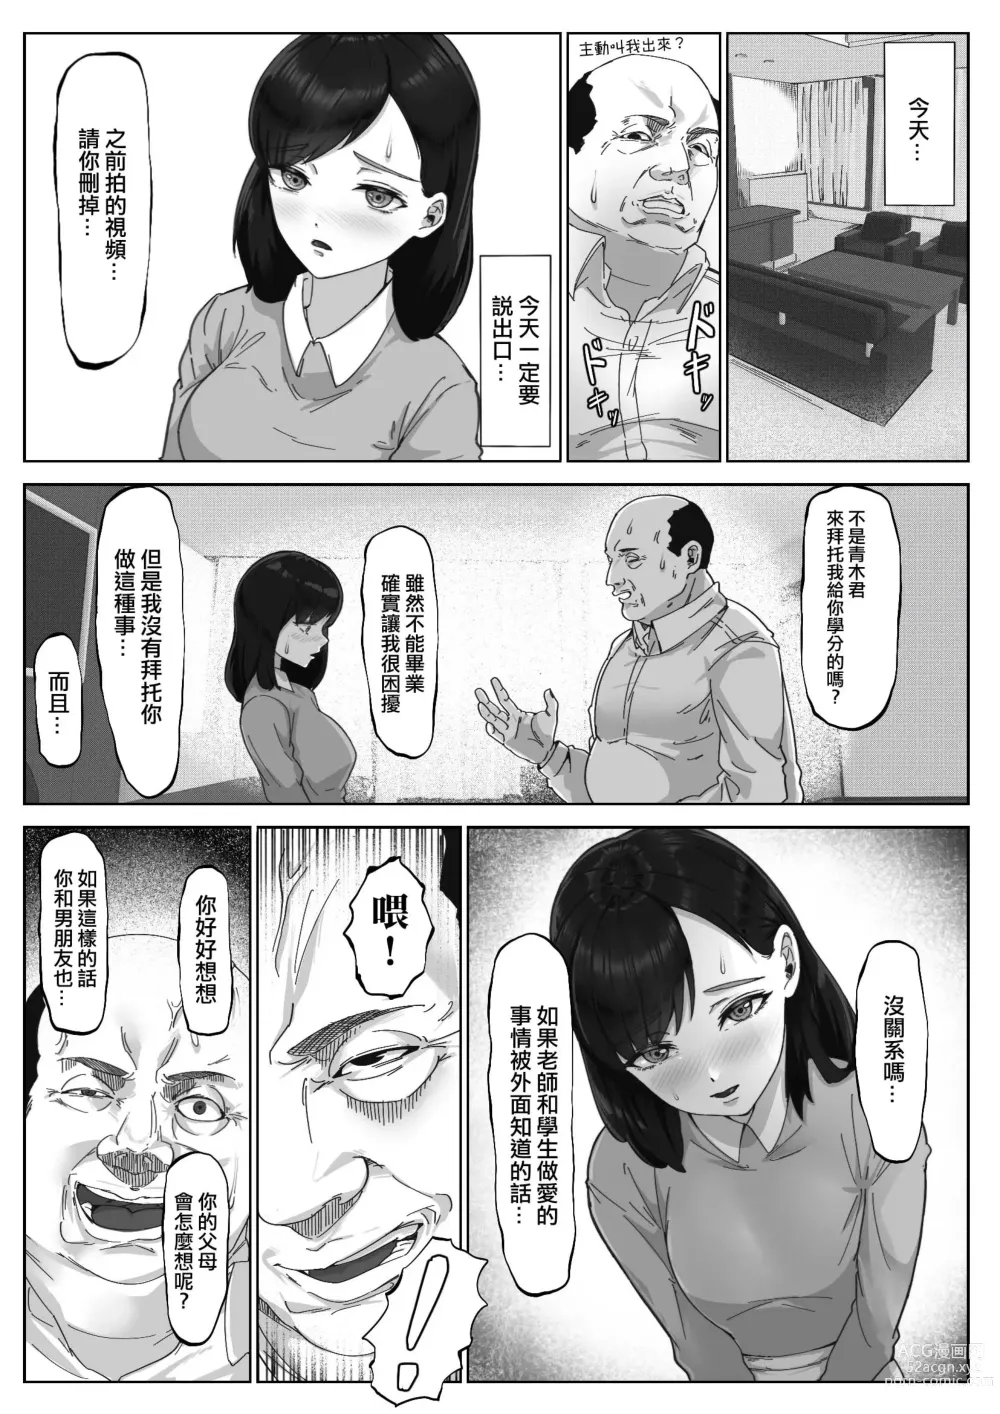 Page 14 of doujinshi 因為想要學分所以和老師上床了這件事